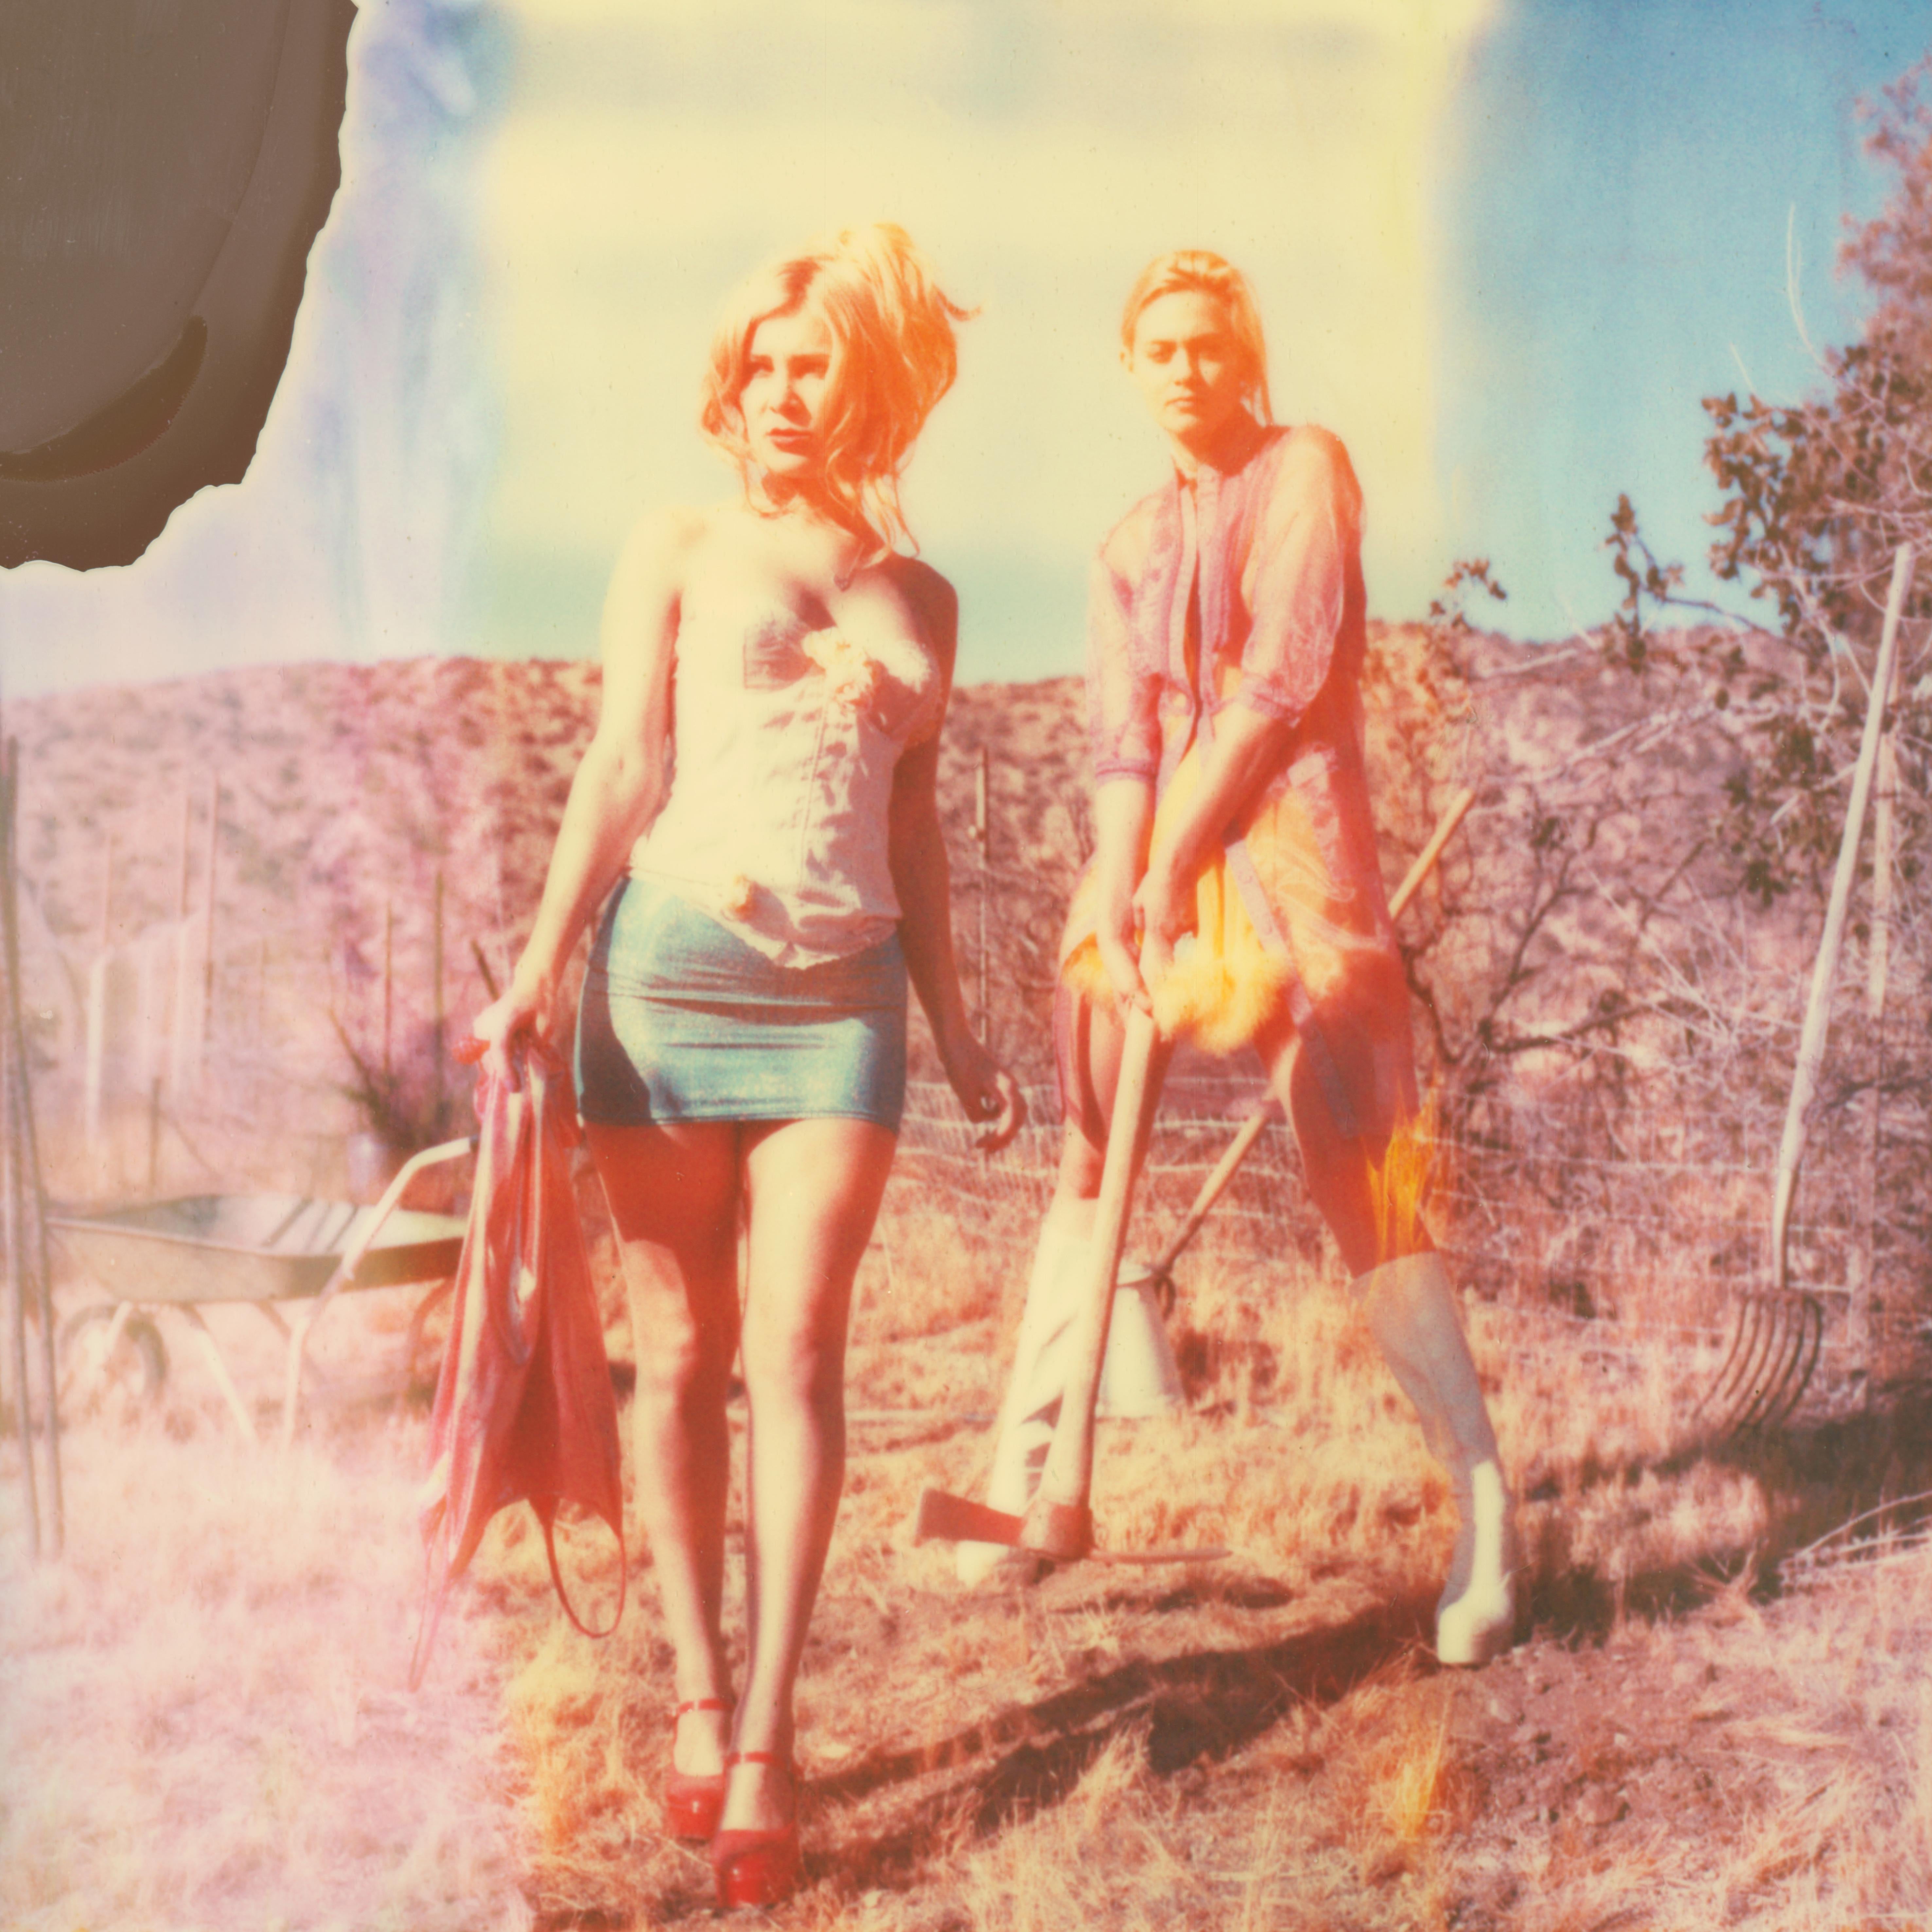 Homesteading (Heavenly Falls) - Polaroid, Contemporary, 21st Century, Color